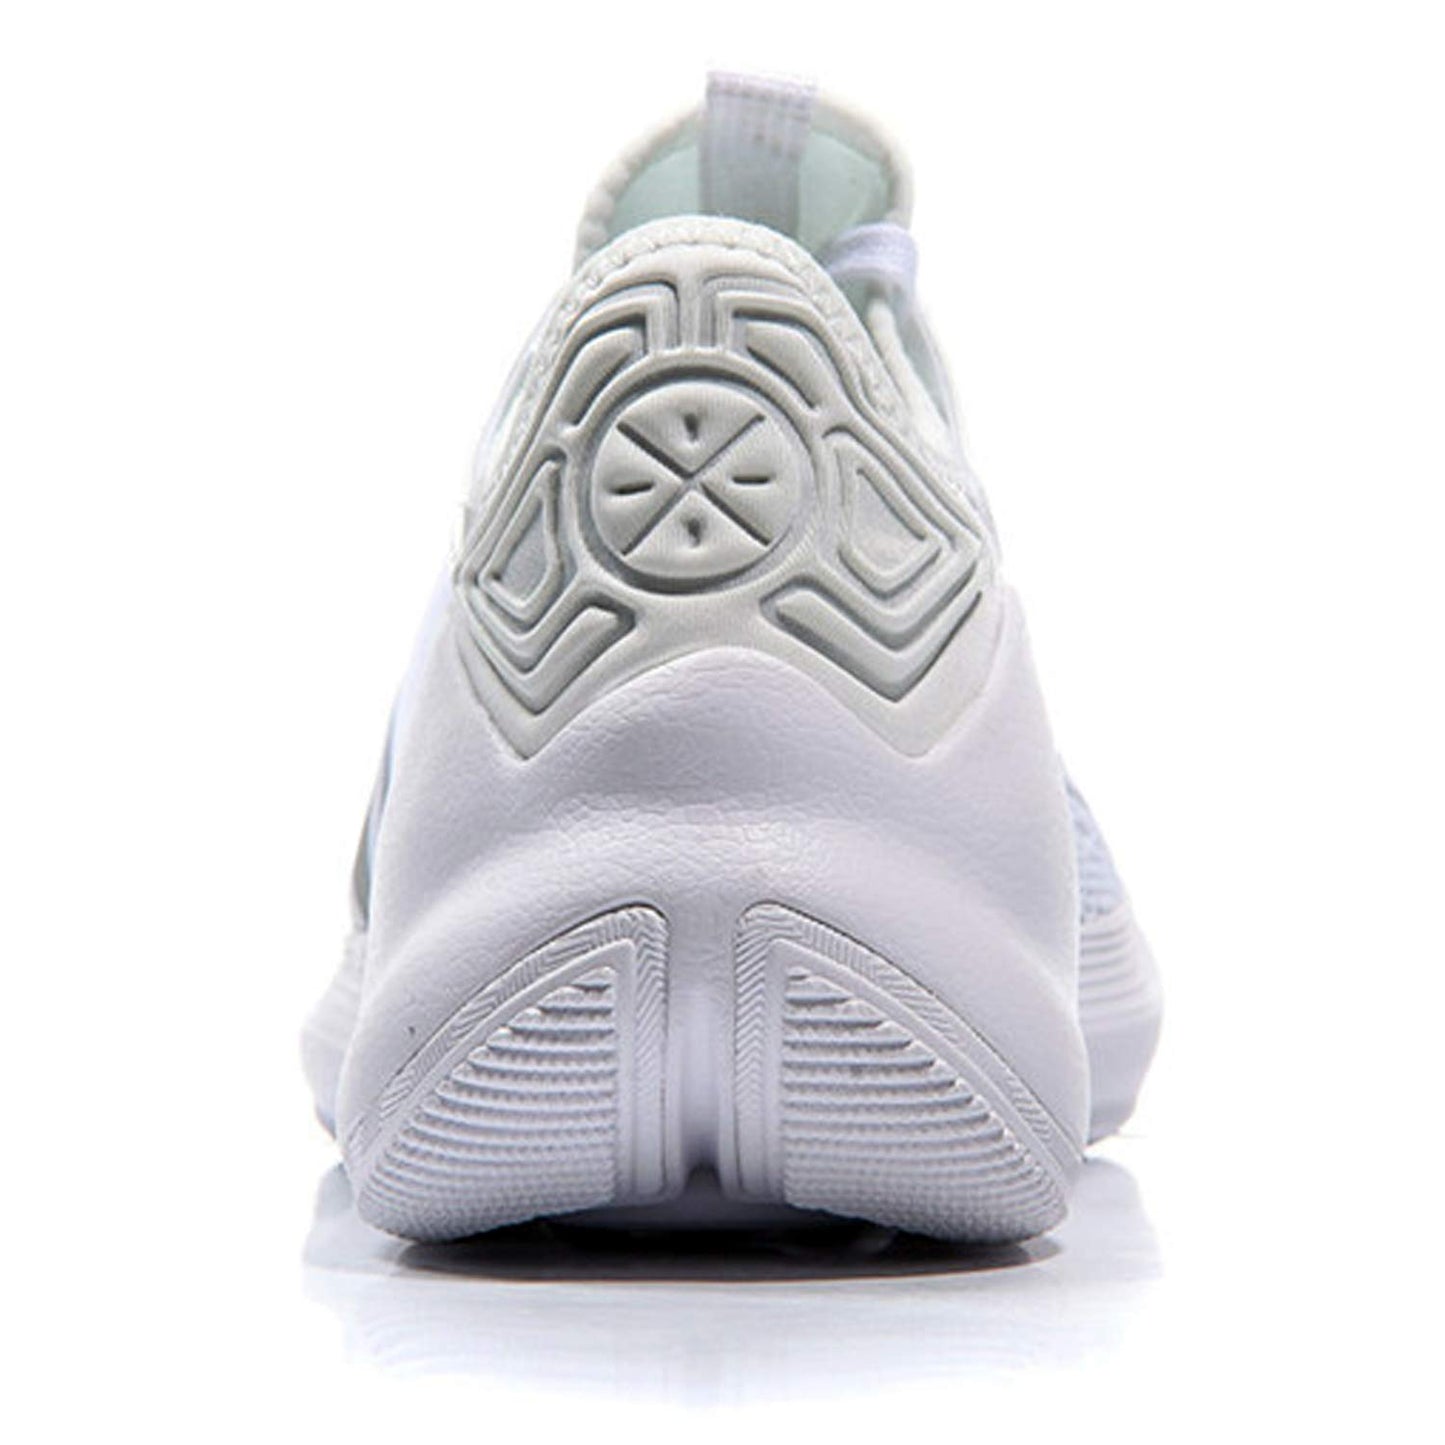 Li-Ning ABCM012-3 Female Basketball Shoes, Basic White/Grey - Best Price online Prokicksports.com